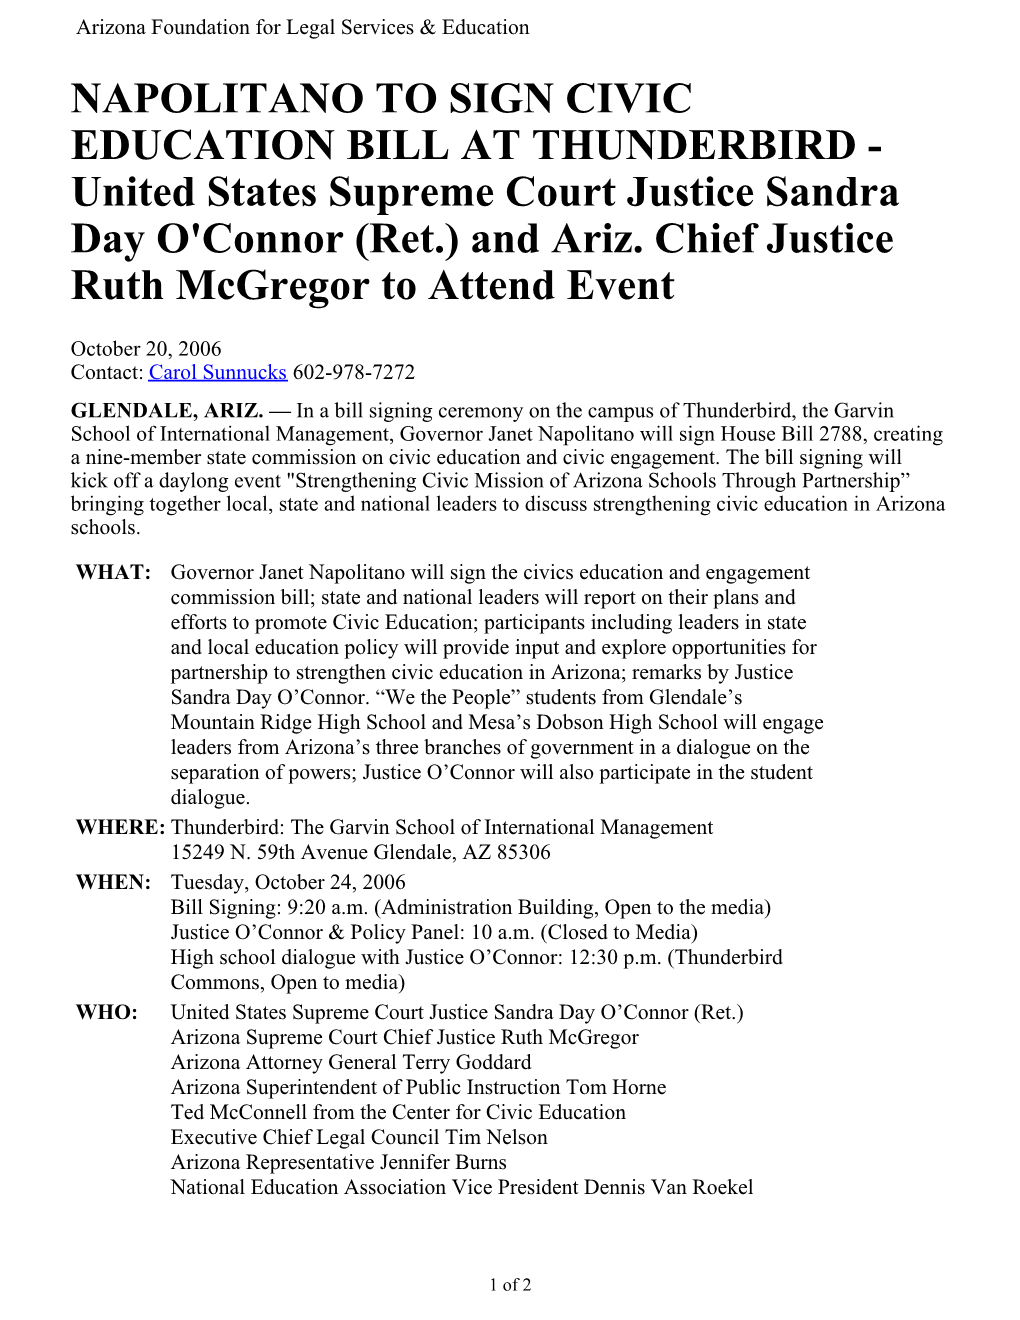 United States Supreme Court Justice Sandra Day O'connor (Ret.) and Ariz